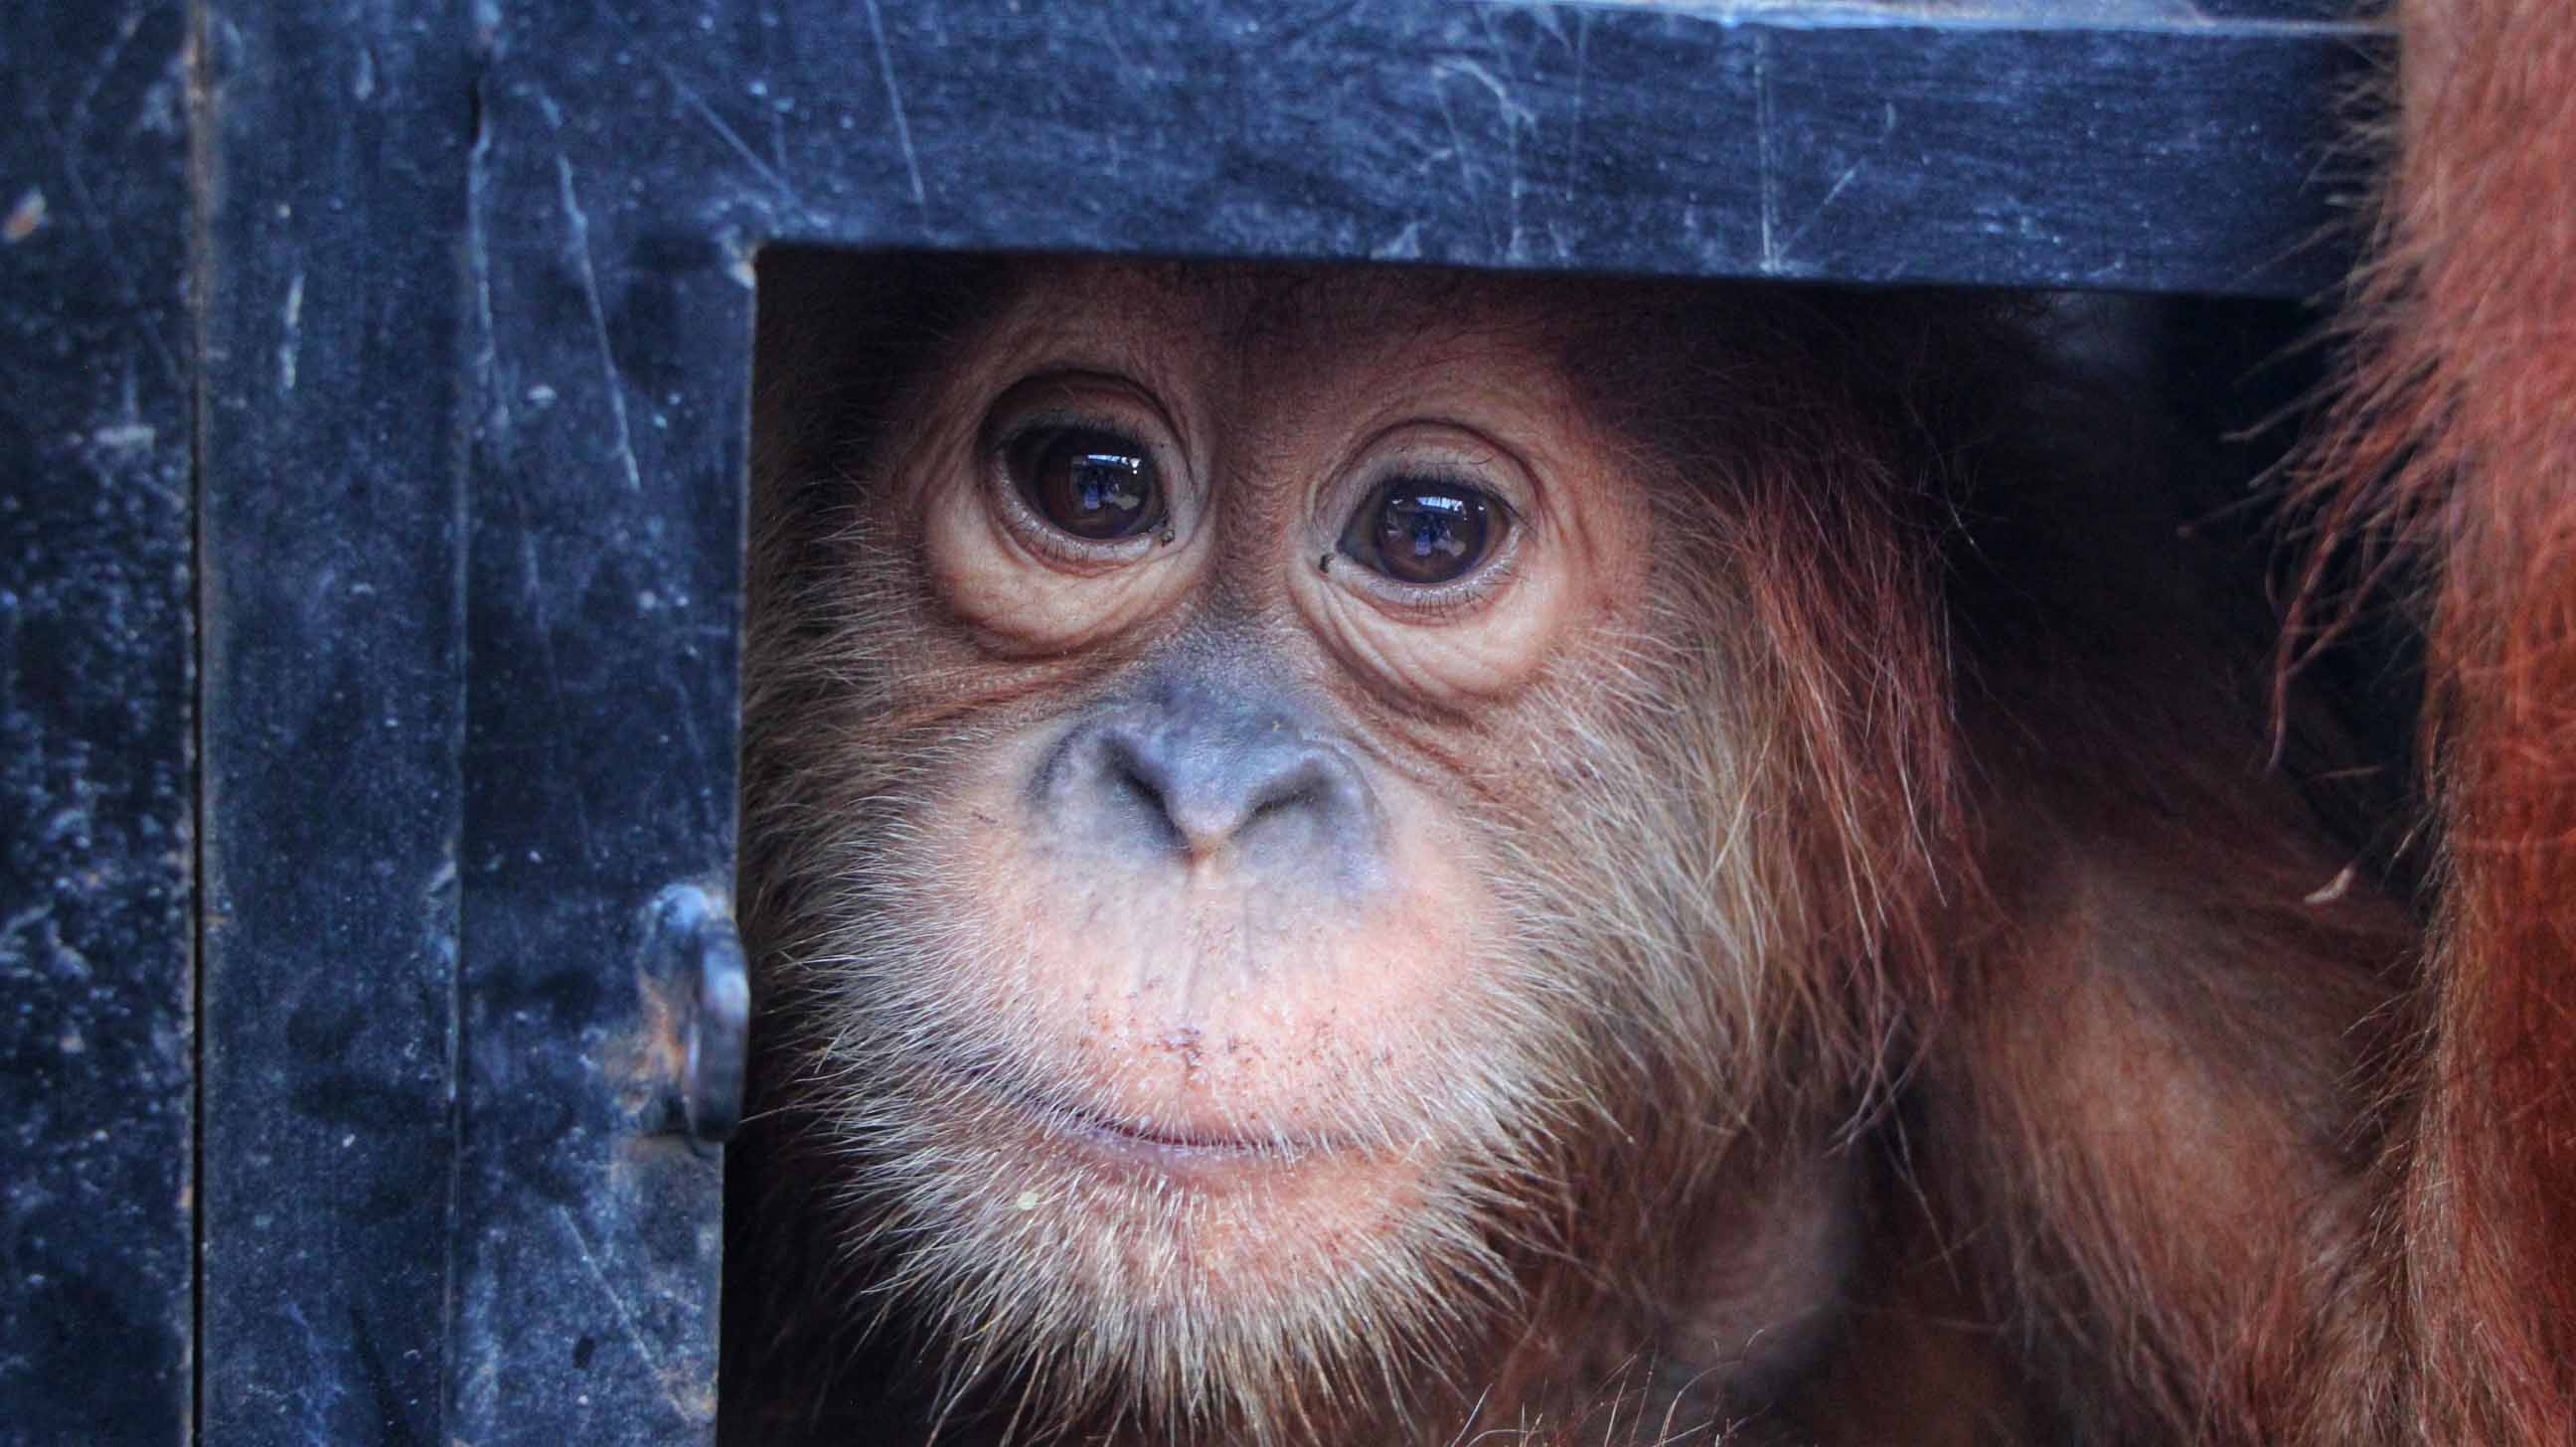 OU Anak orangutan sumatera dipelihara seorang pejabat Aceh Barat Daya OIC membantu BKSDA Aceh mengevakuasinya Pemiliktak diproses hukum AyatSKaro